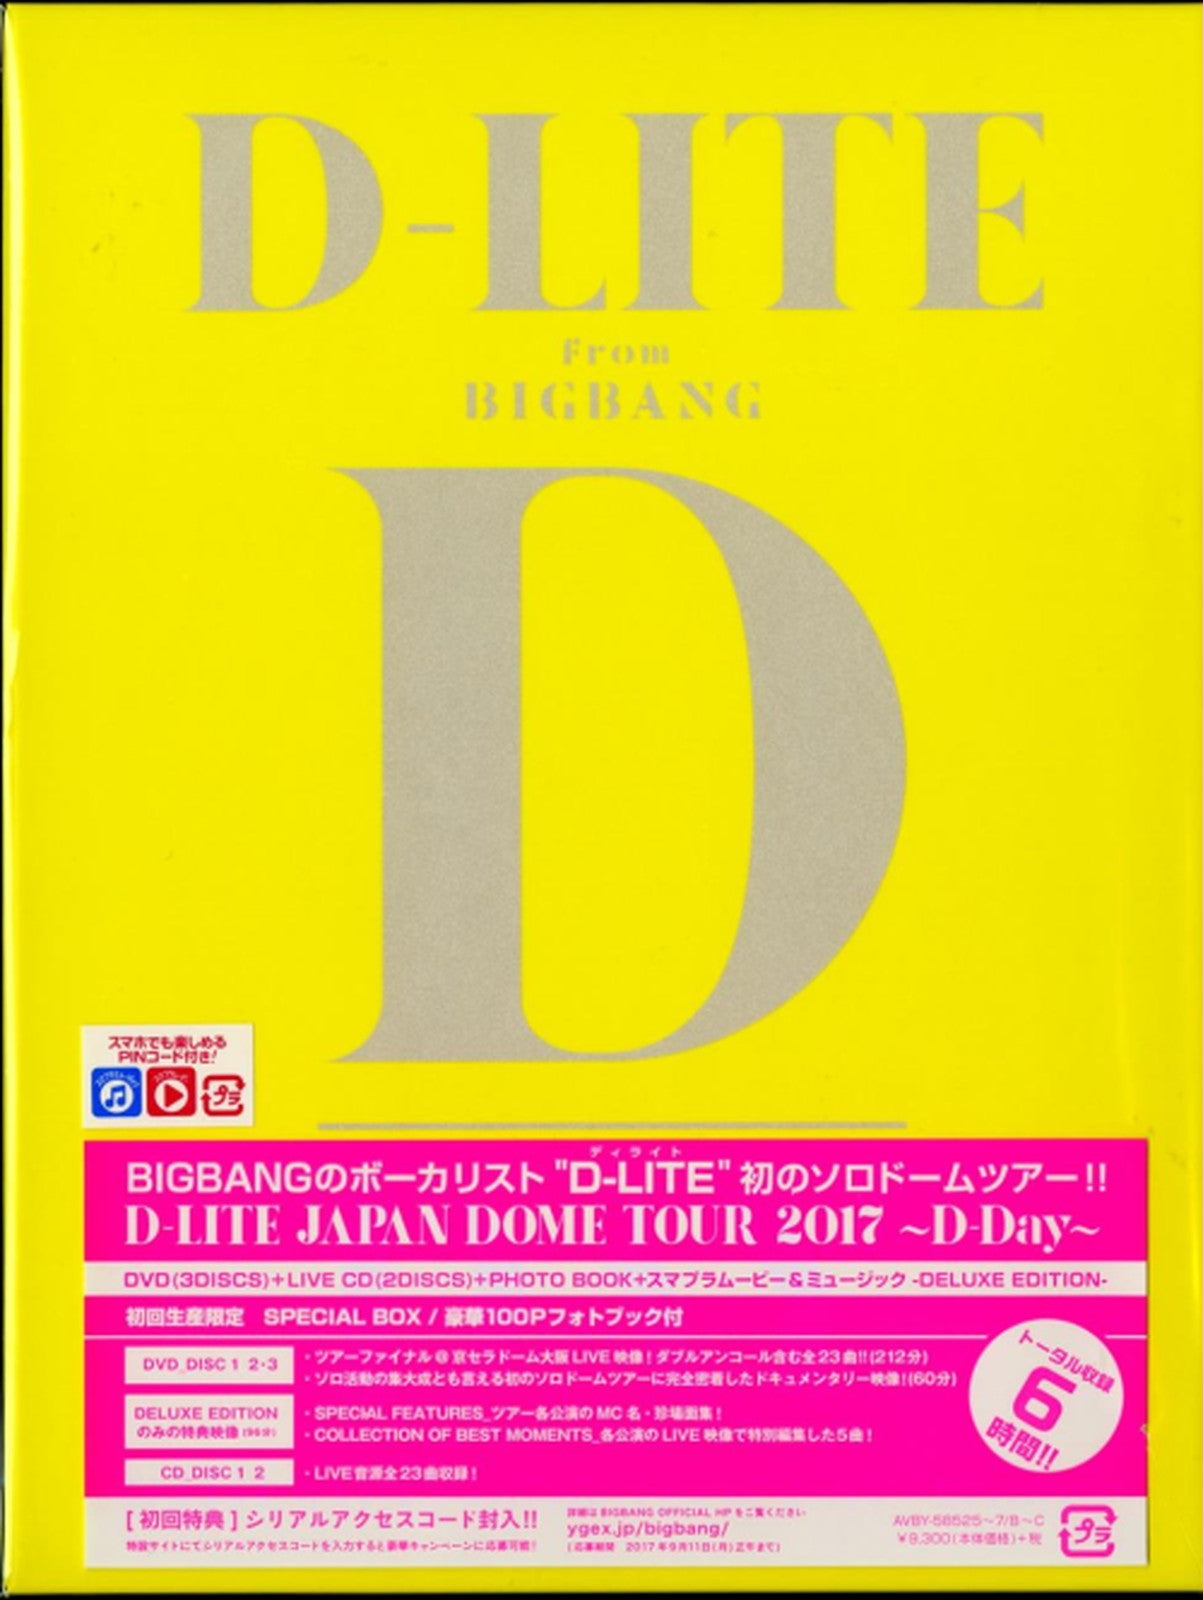 D-Lite (From Bigbang) - D-Lite Japan Dome Tour 2017 D-Day - 3 DVD+ 